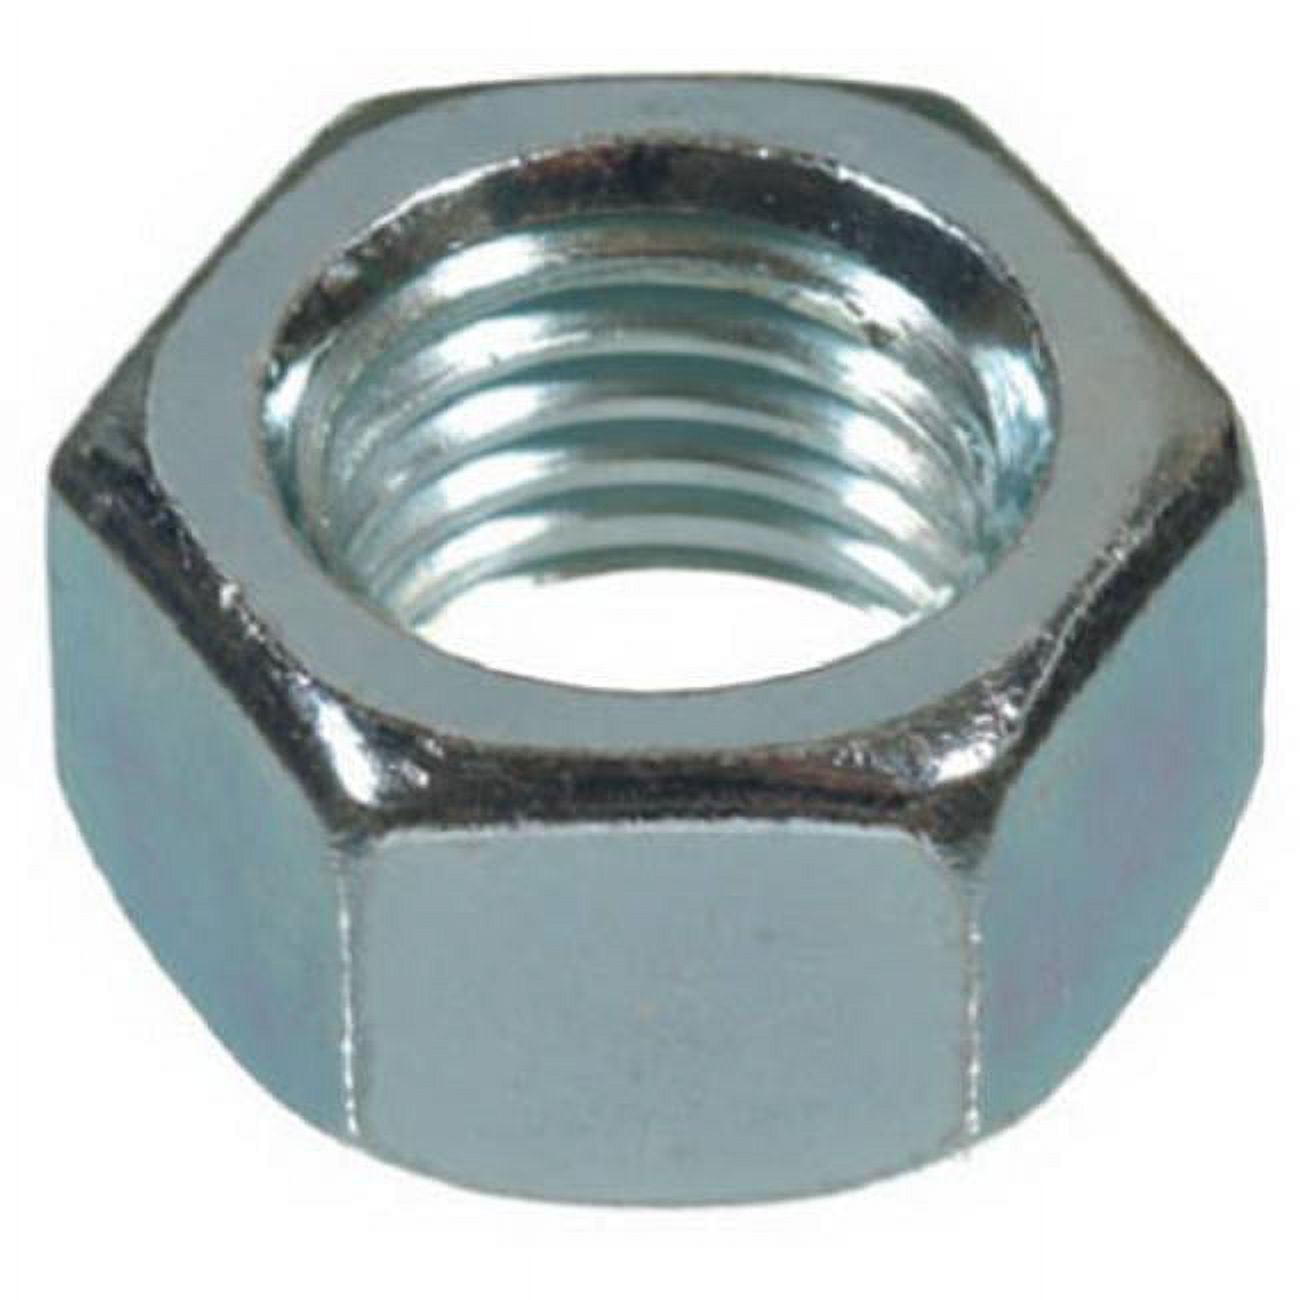 660000 Hex Nut, Coarse Thread, 1/4-20, Zinc-Plated Steel, 25-Lb. - Quantity 1 - image 1 of 2